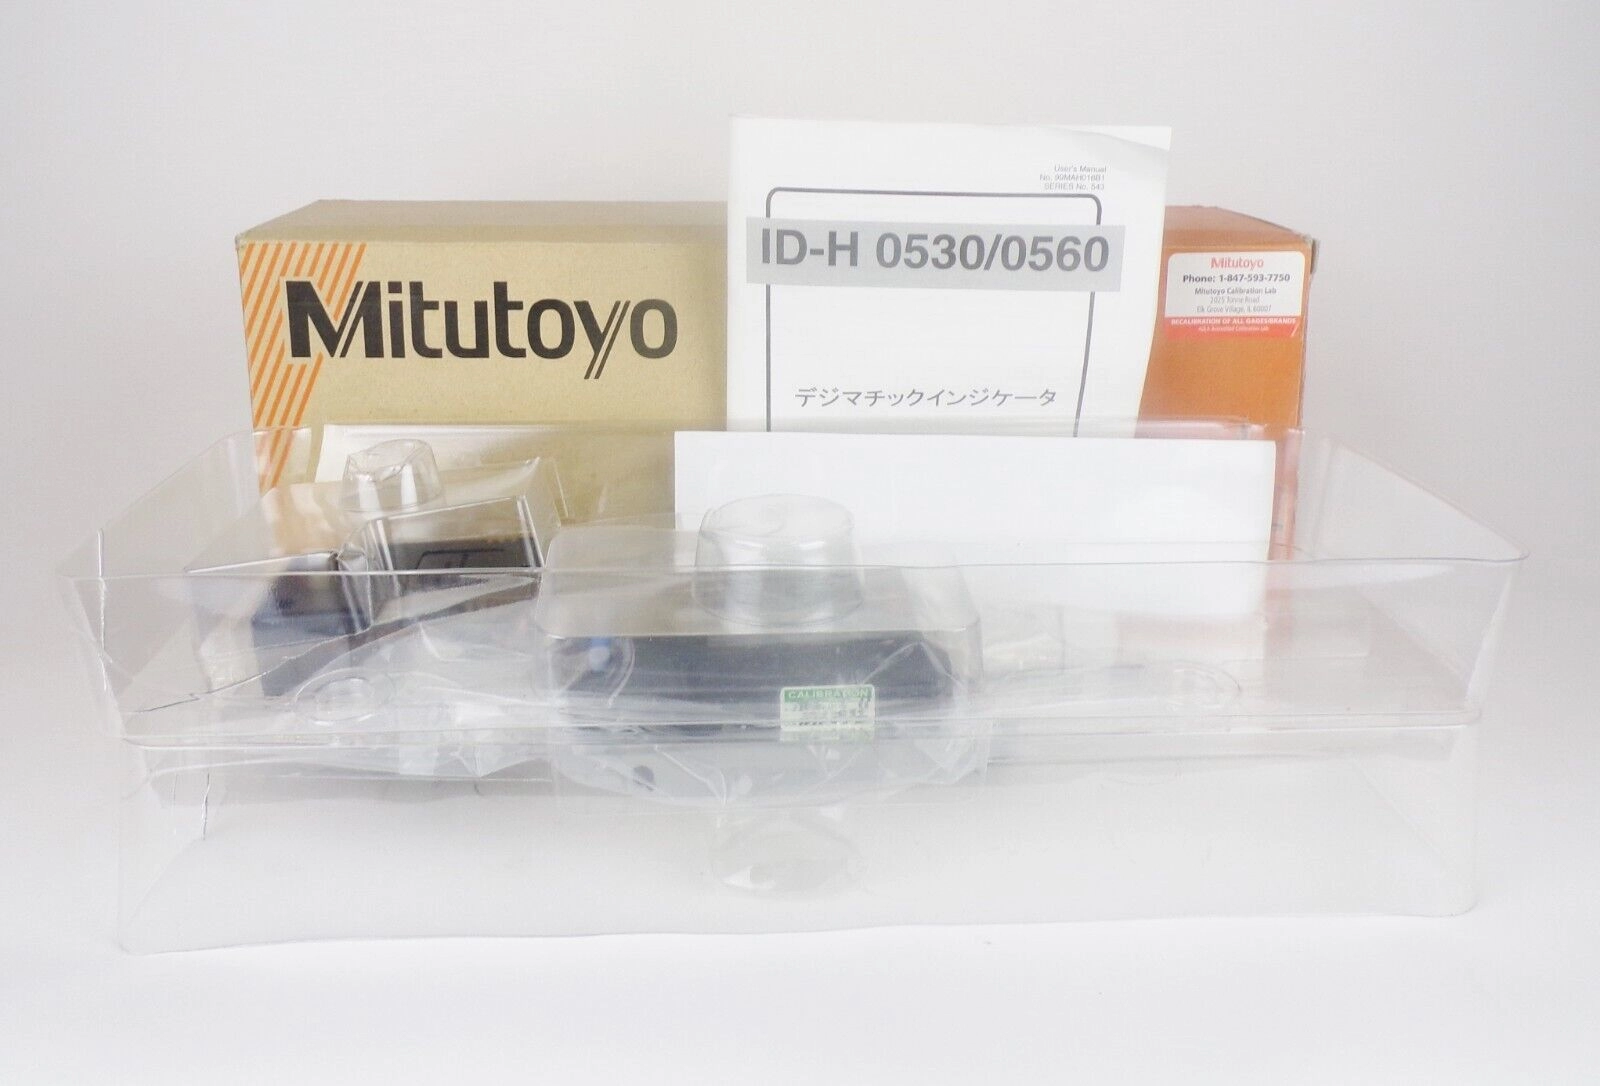 Mitutoyo ID-H0530 Digimatic Indicator